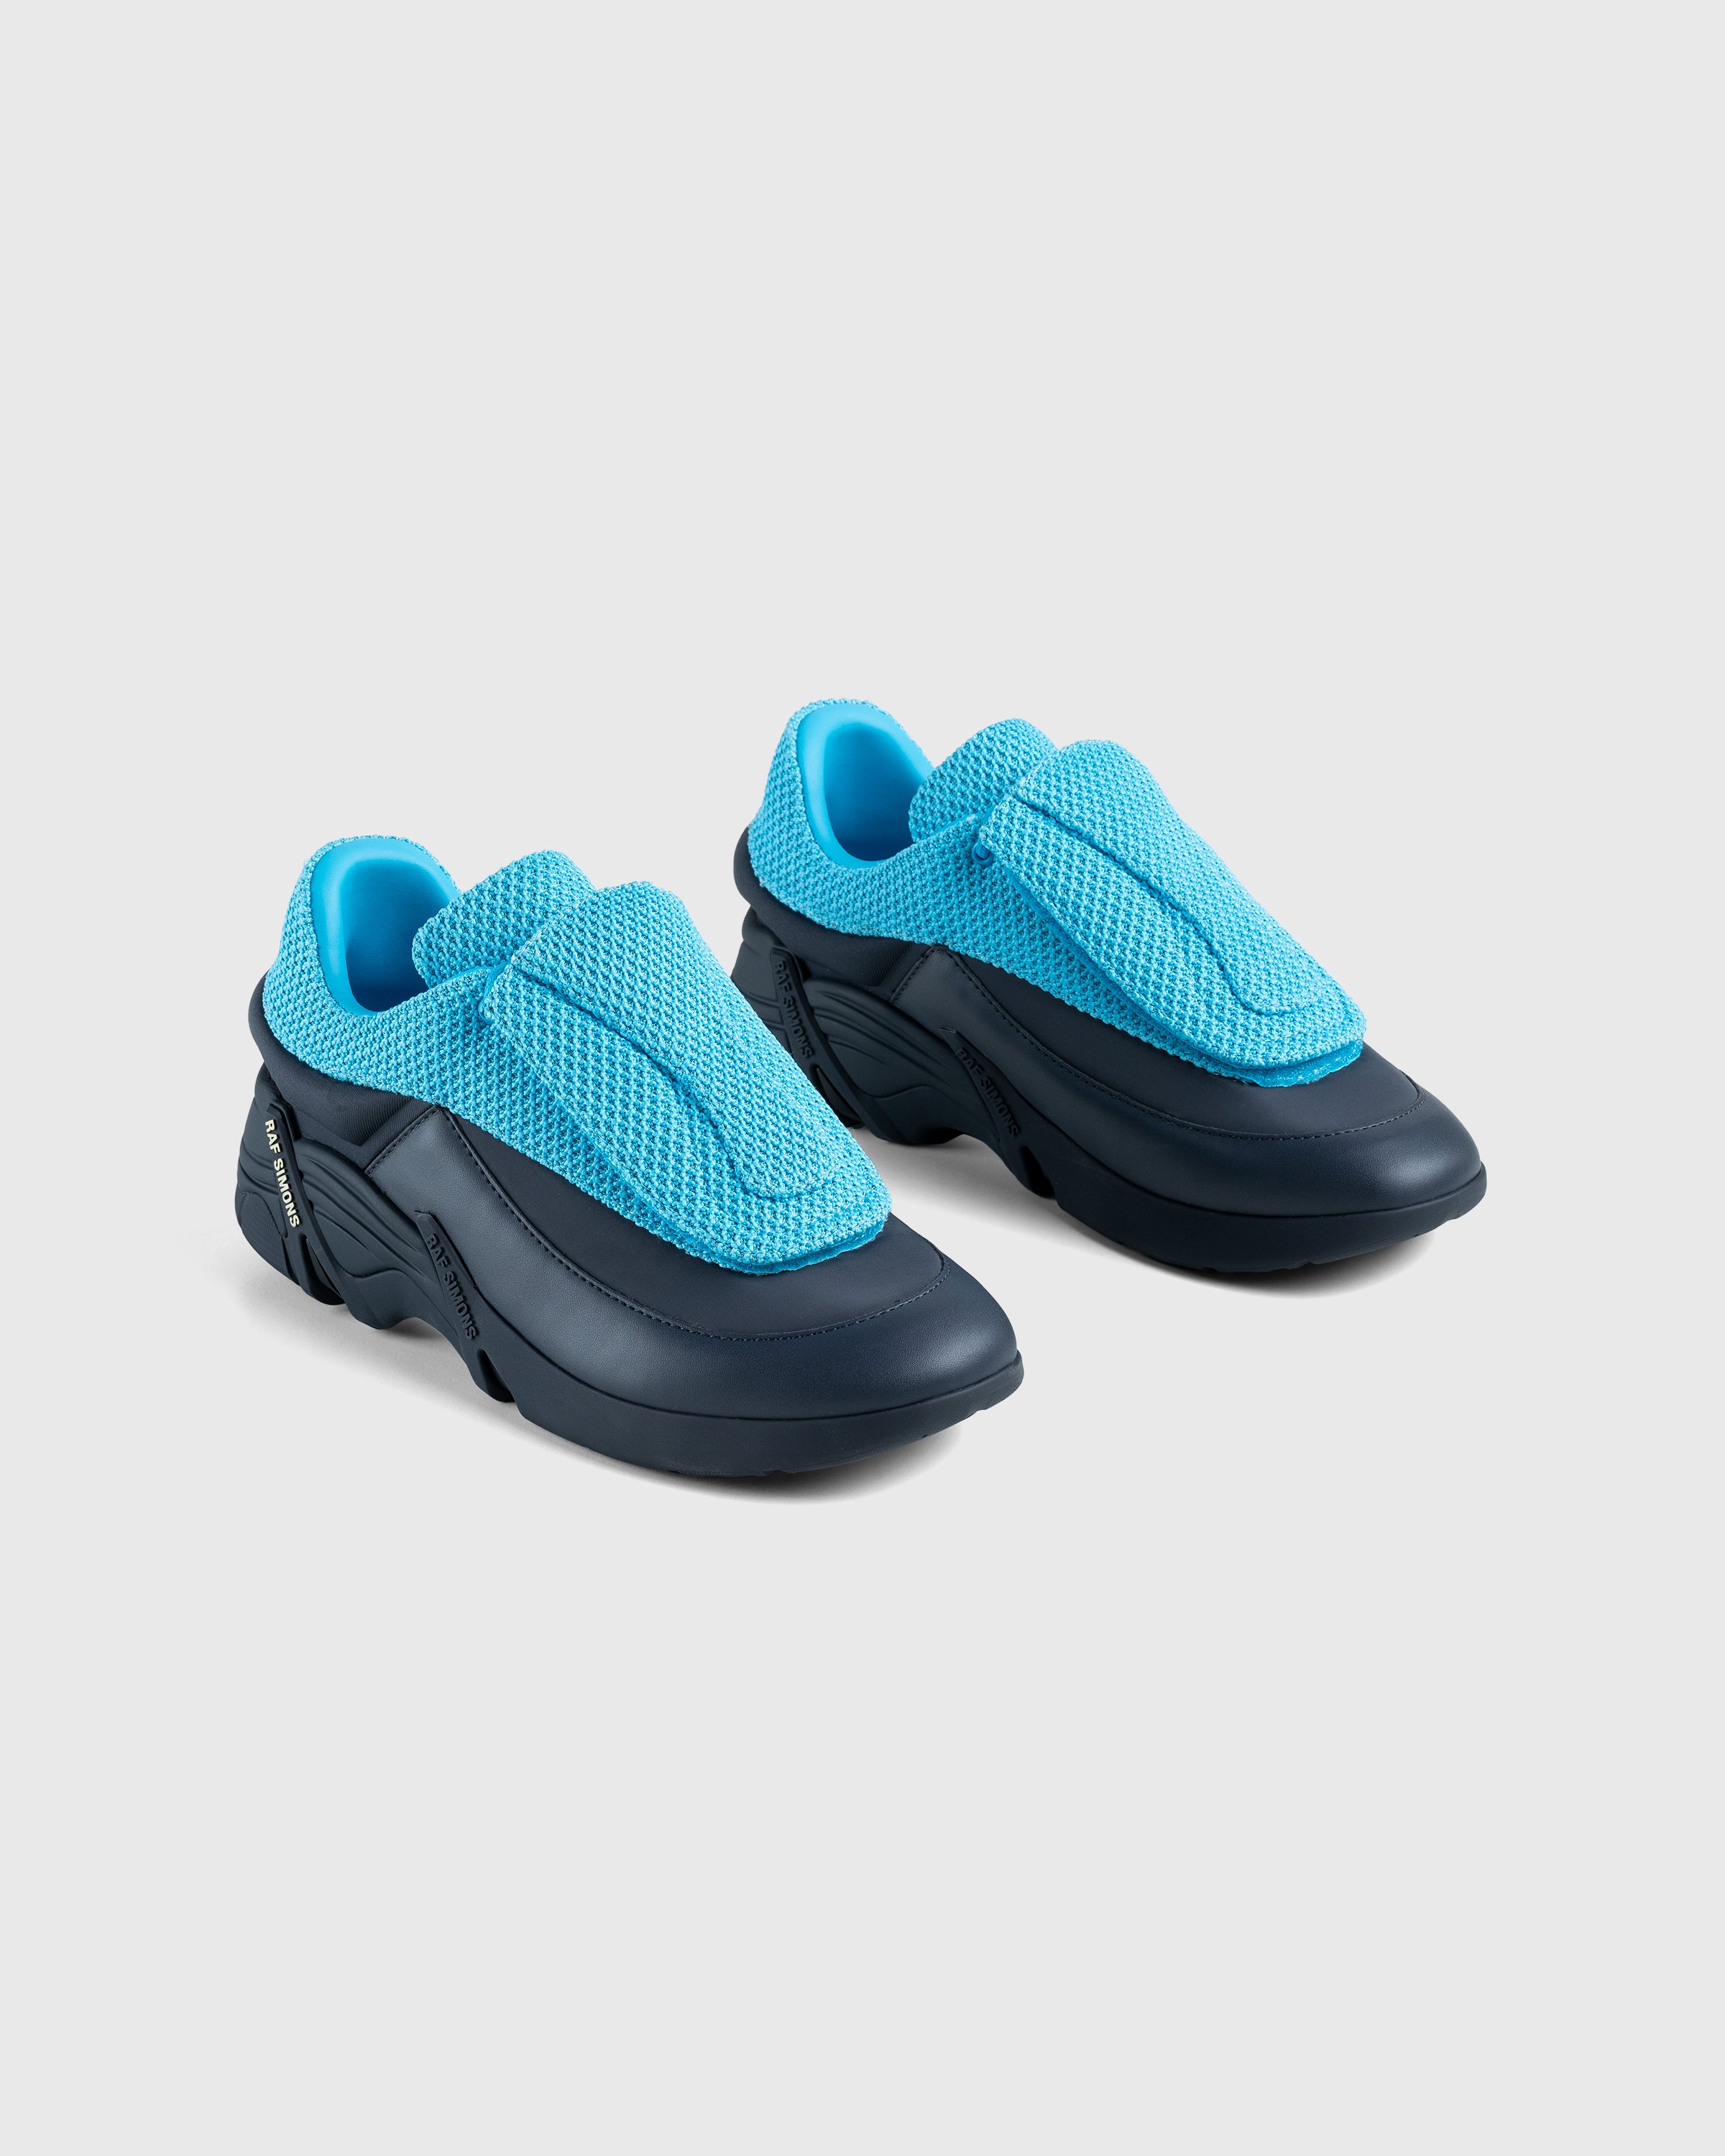 Raf Simons - Antei Aqua - Footwear - Blue - Image 3